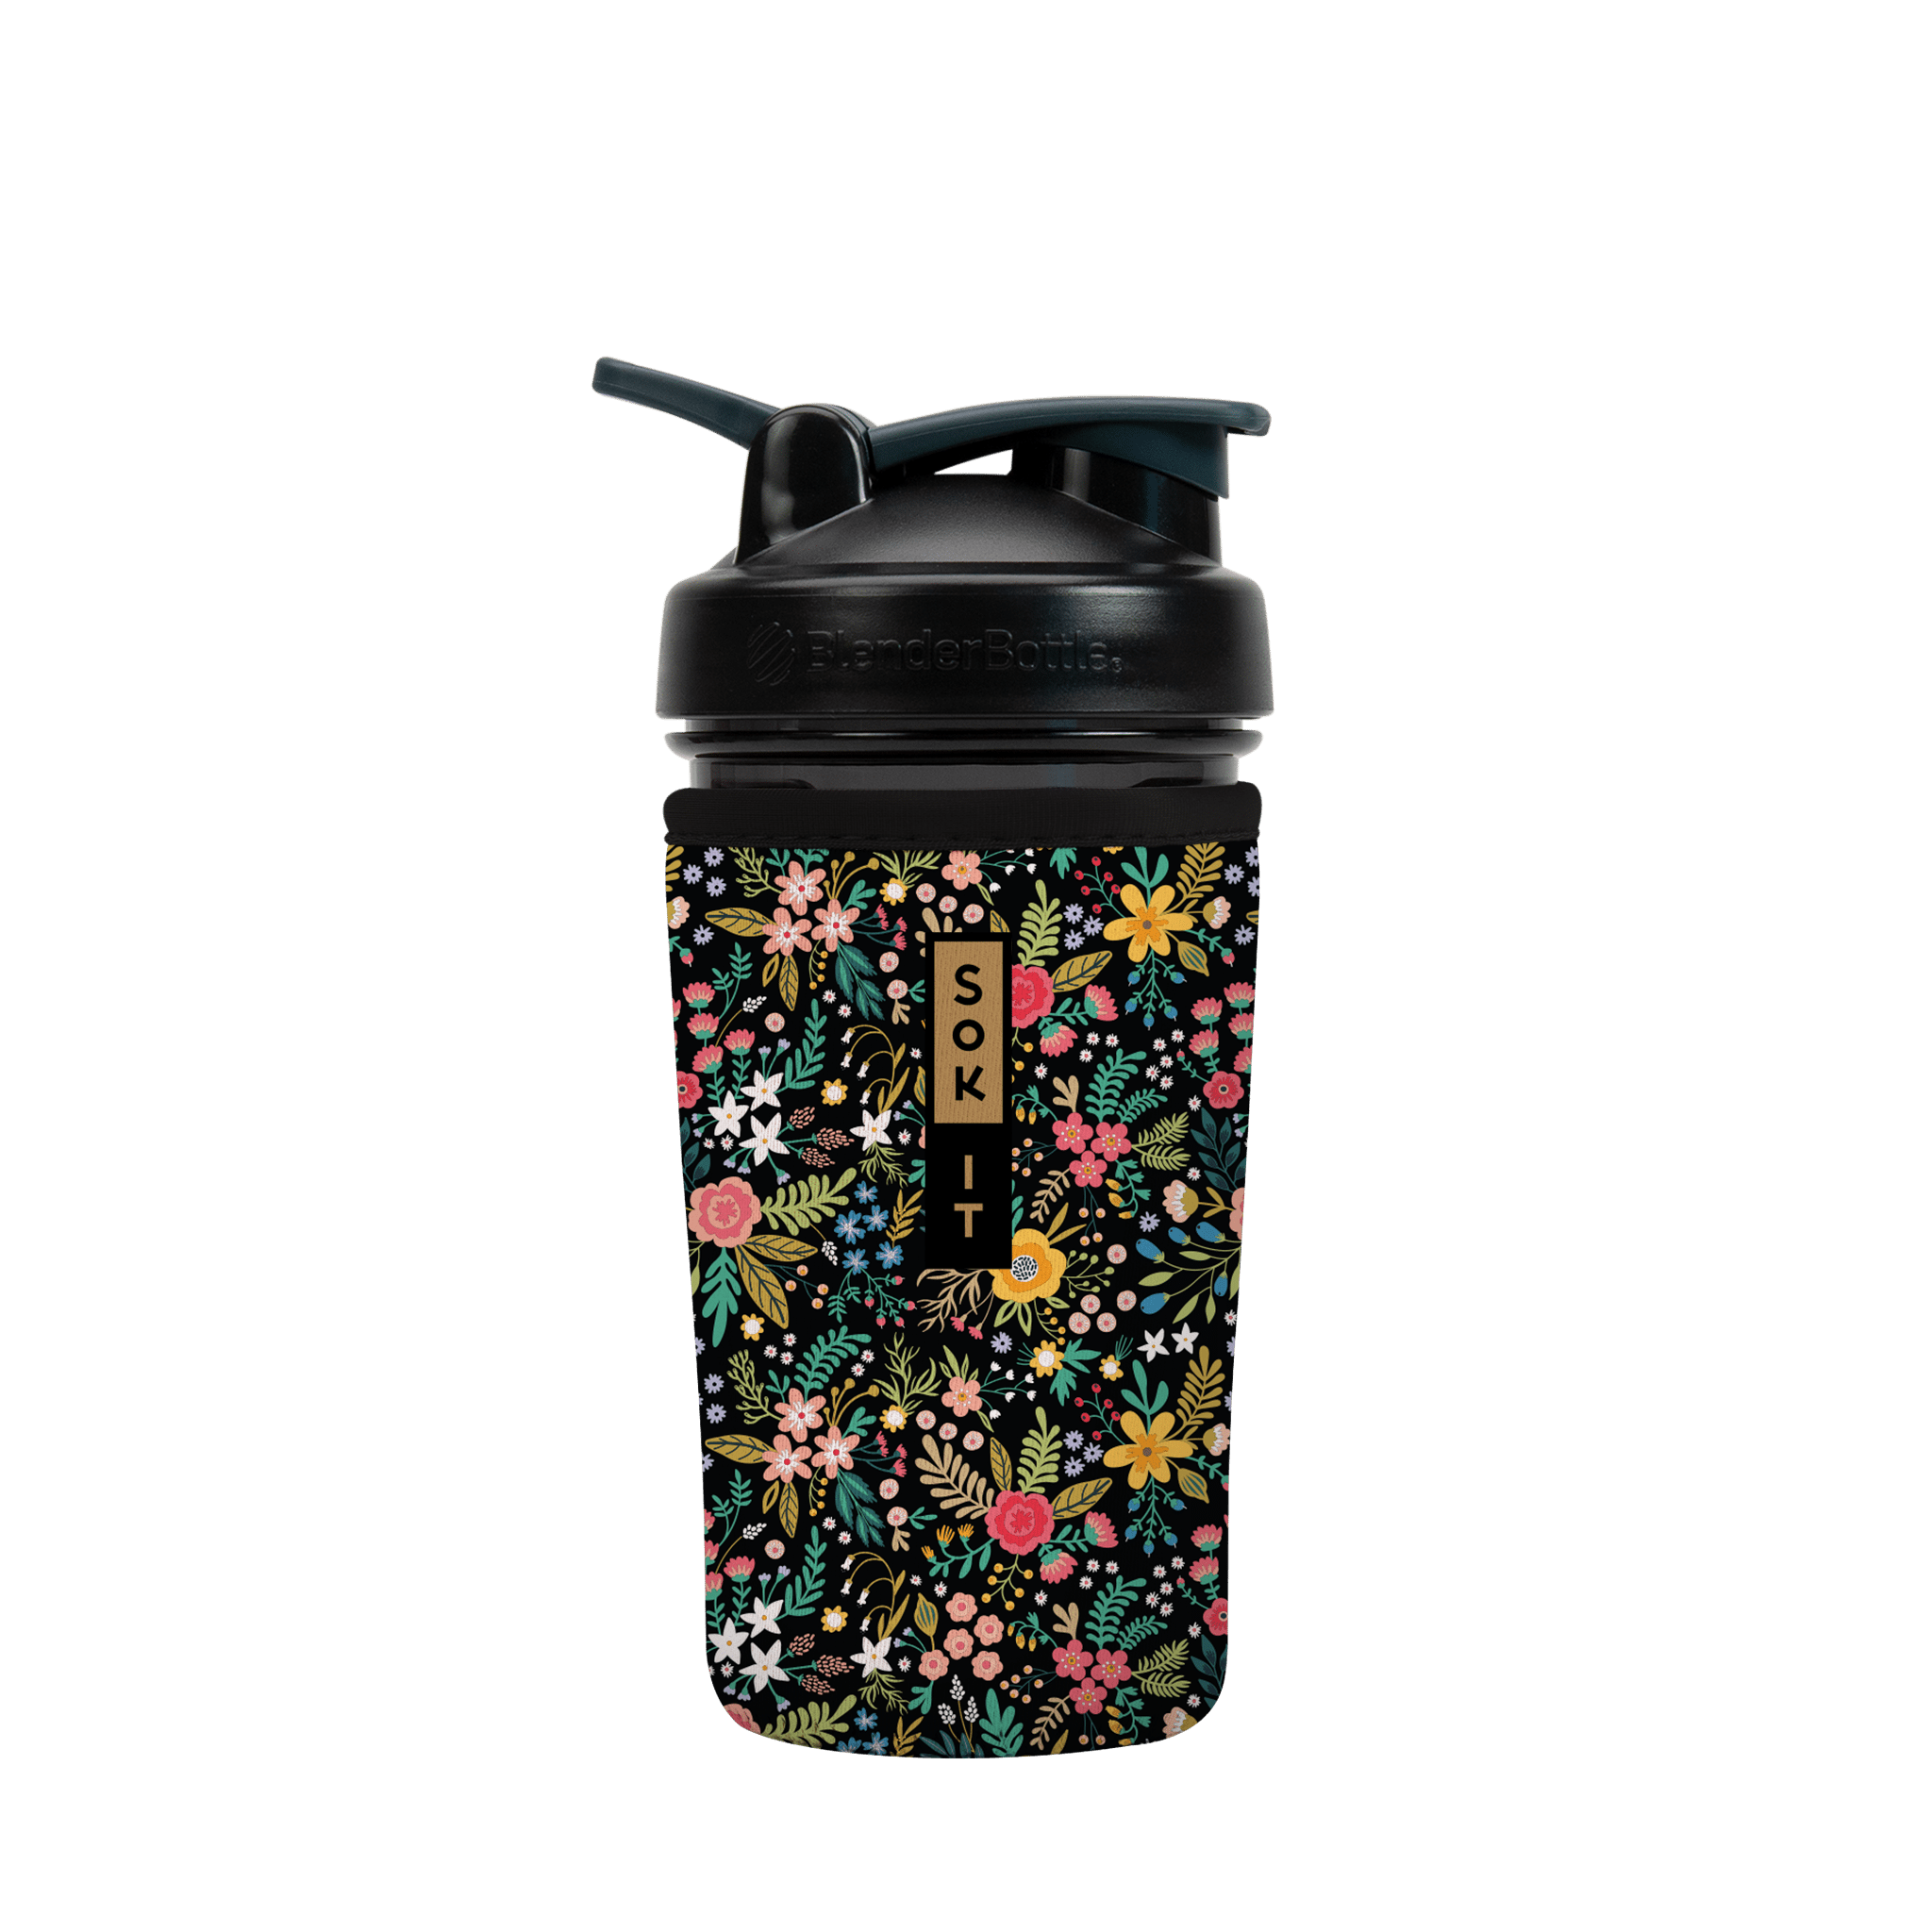 BotlSok - Blender Bottle English Garden Picnic 24oz